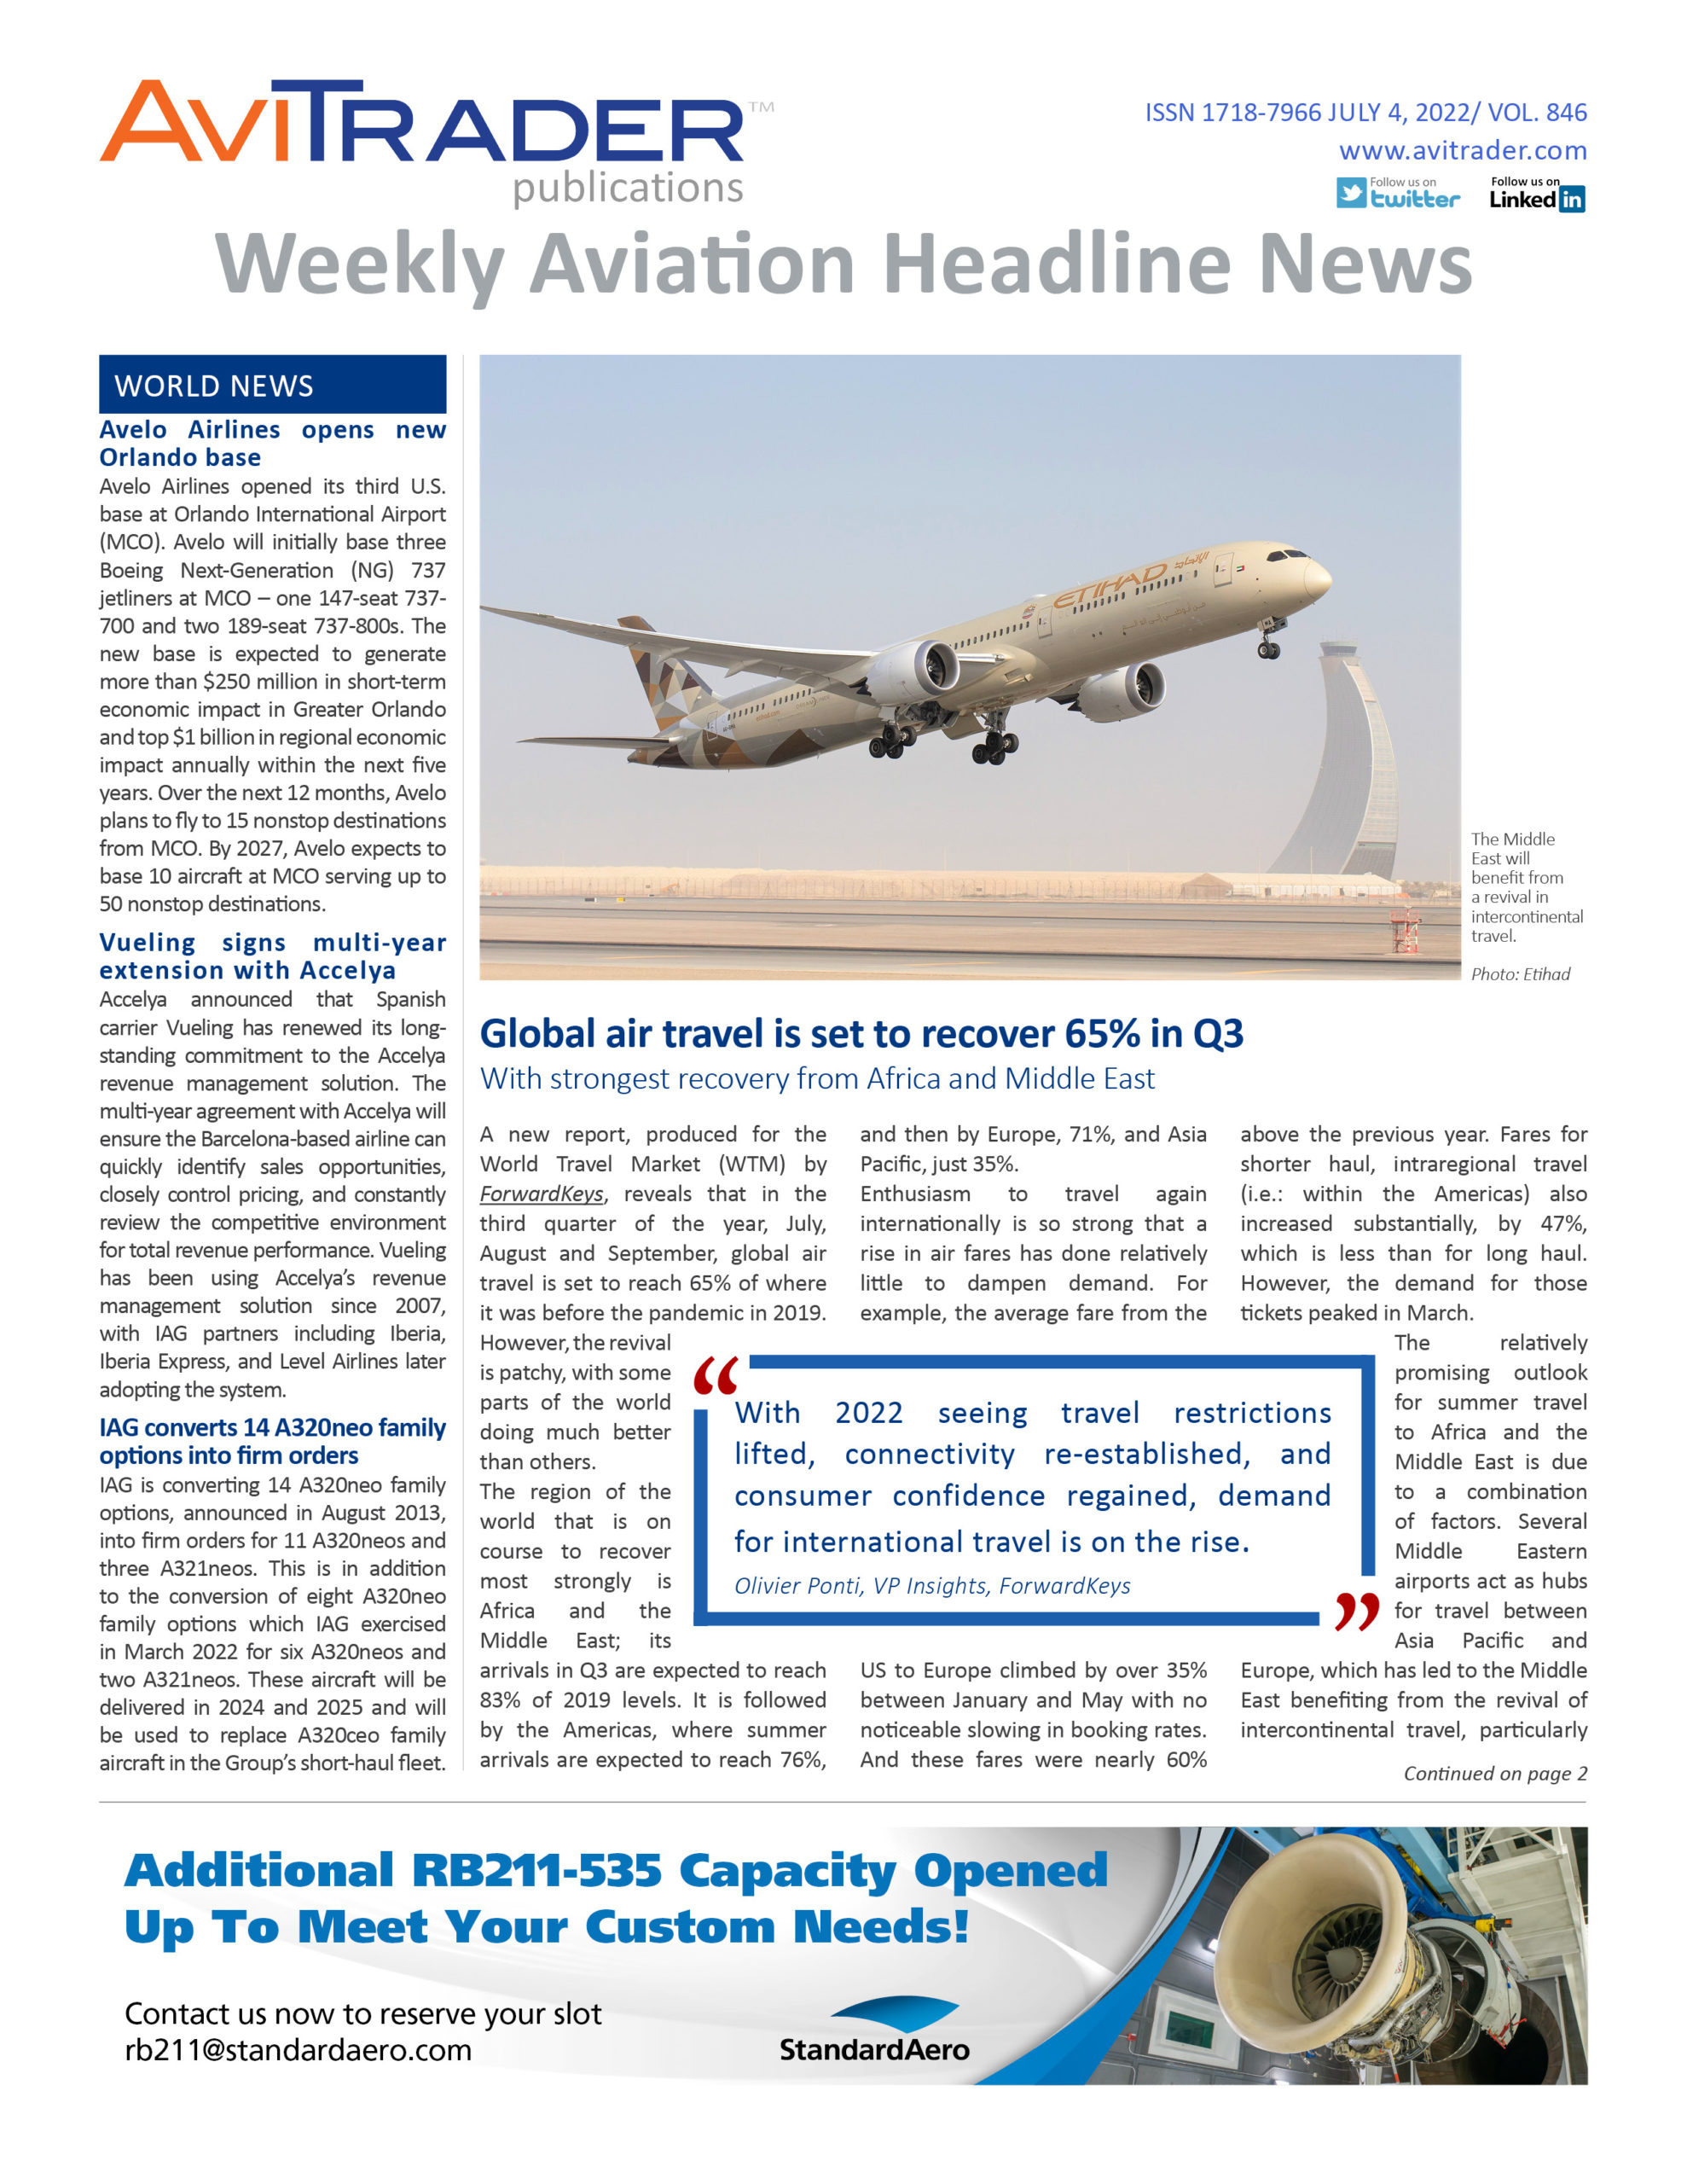 AviTrader_Weekly_Headline_News_Cover_2022-07-04